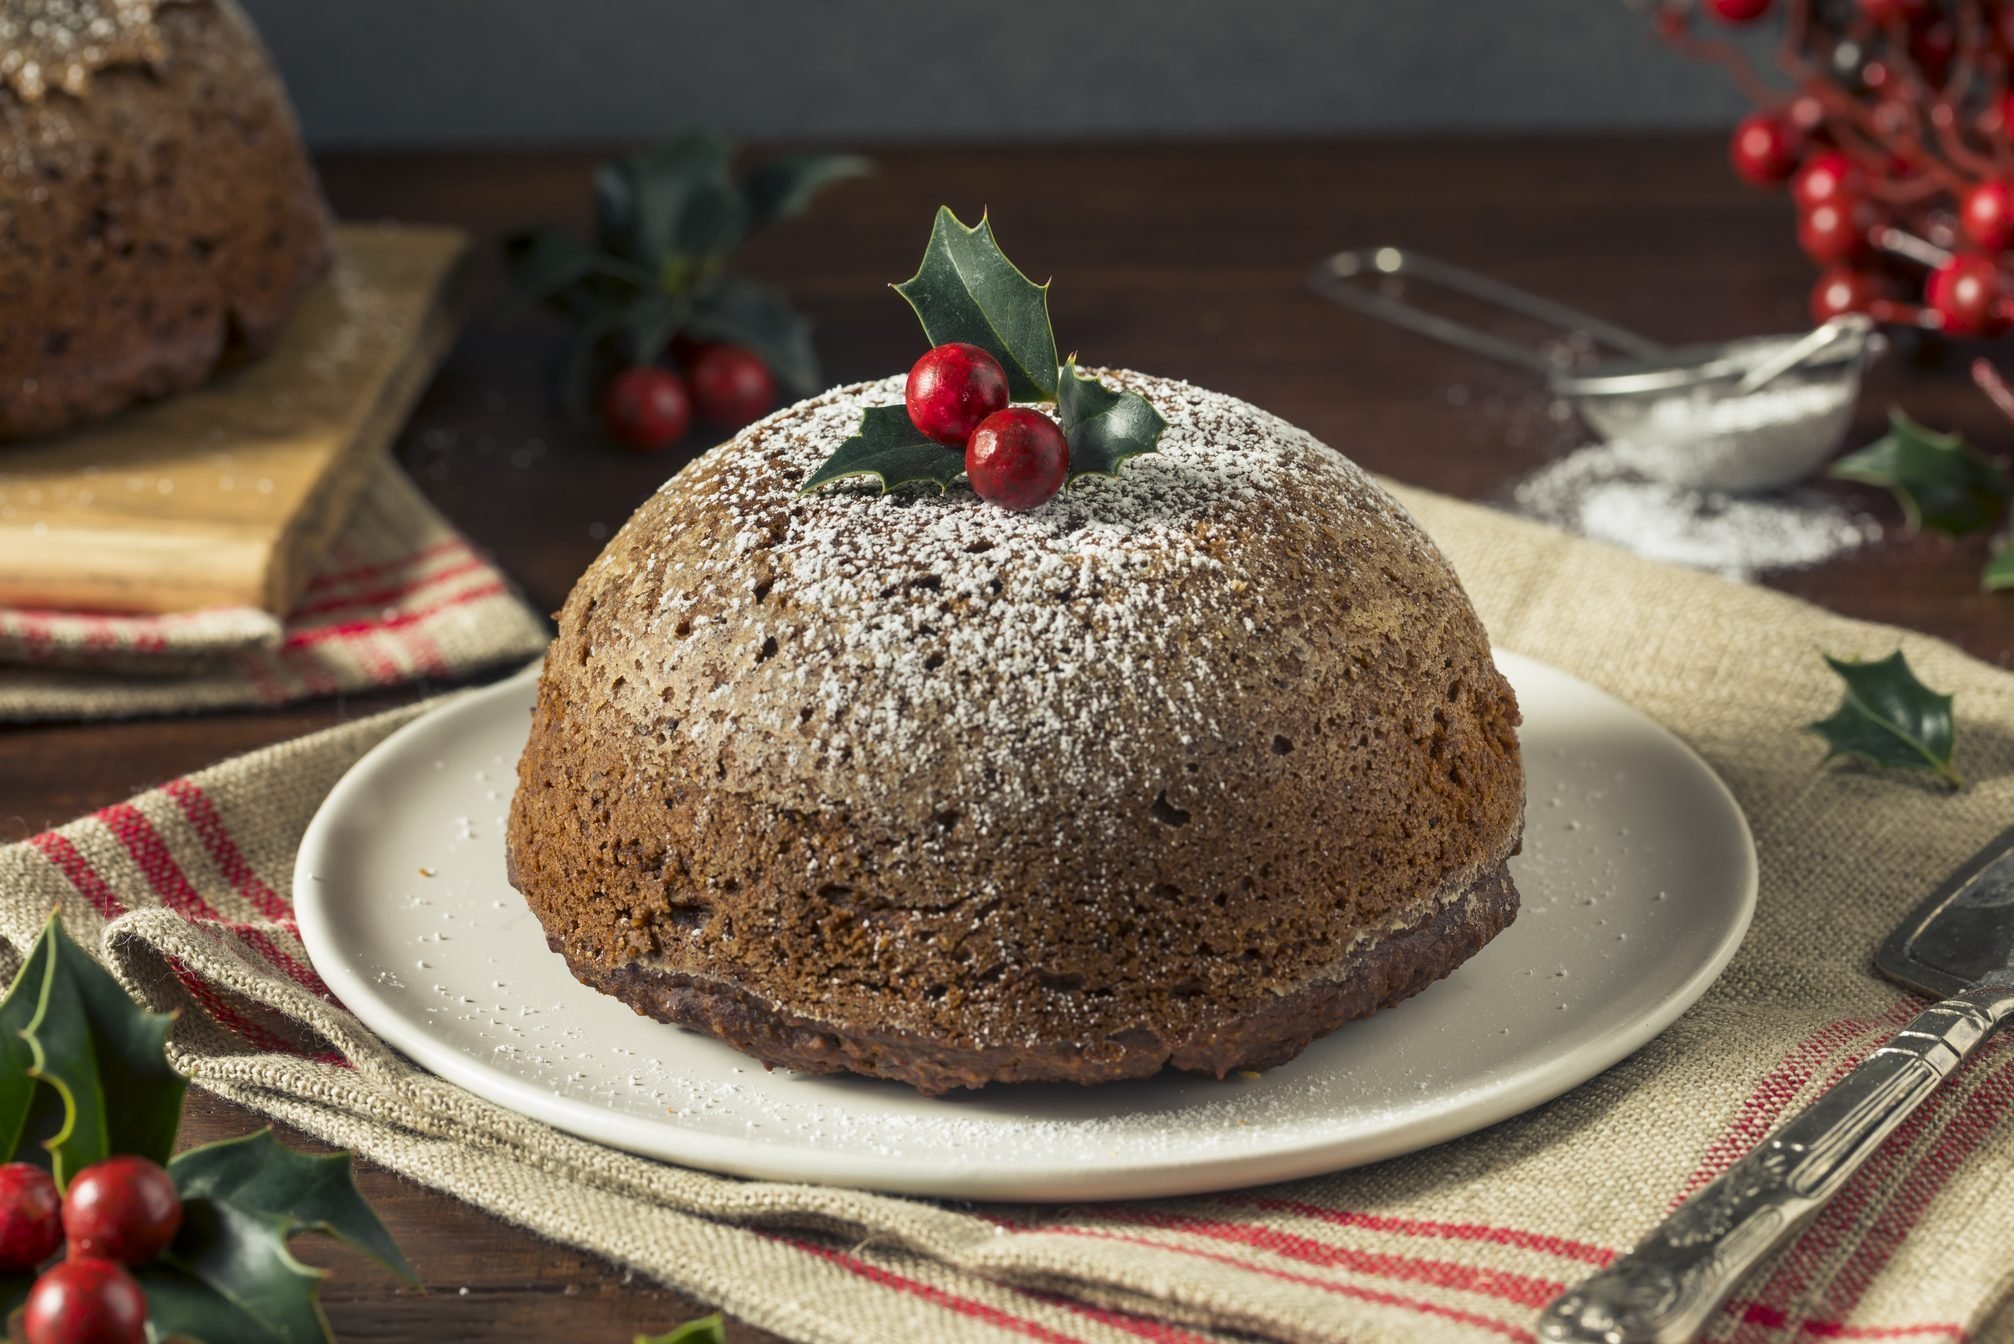 Traditional Christmas Pudding (Figgy Pudding) Recipe